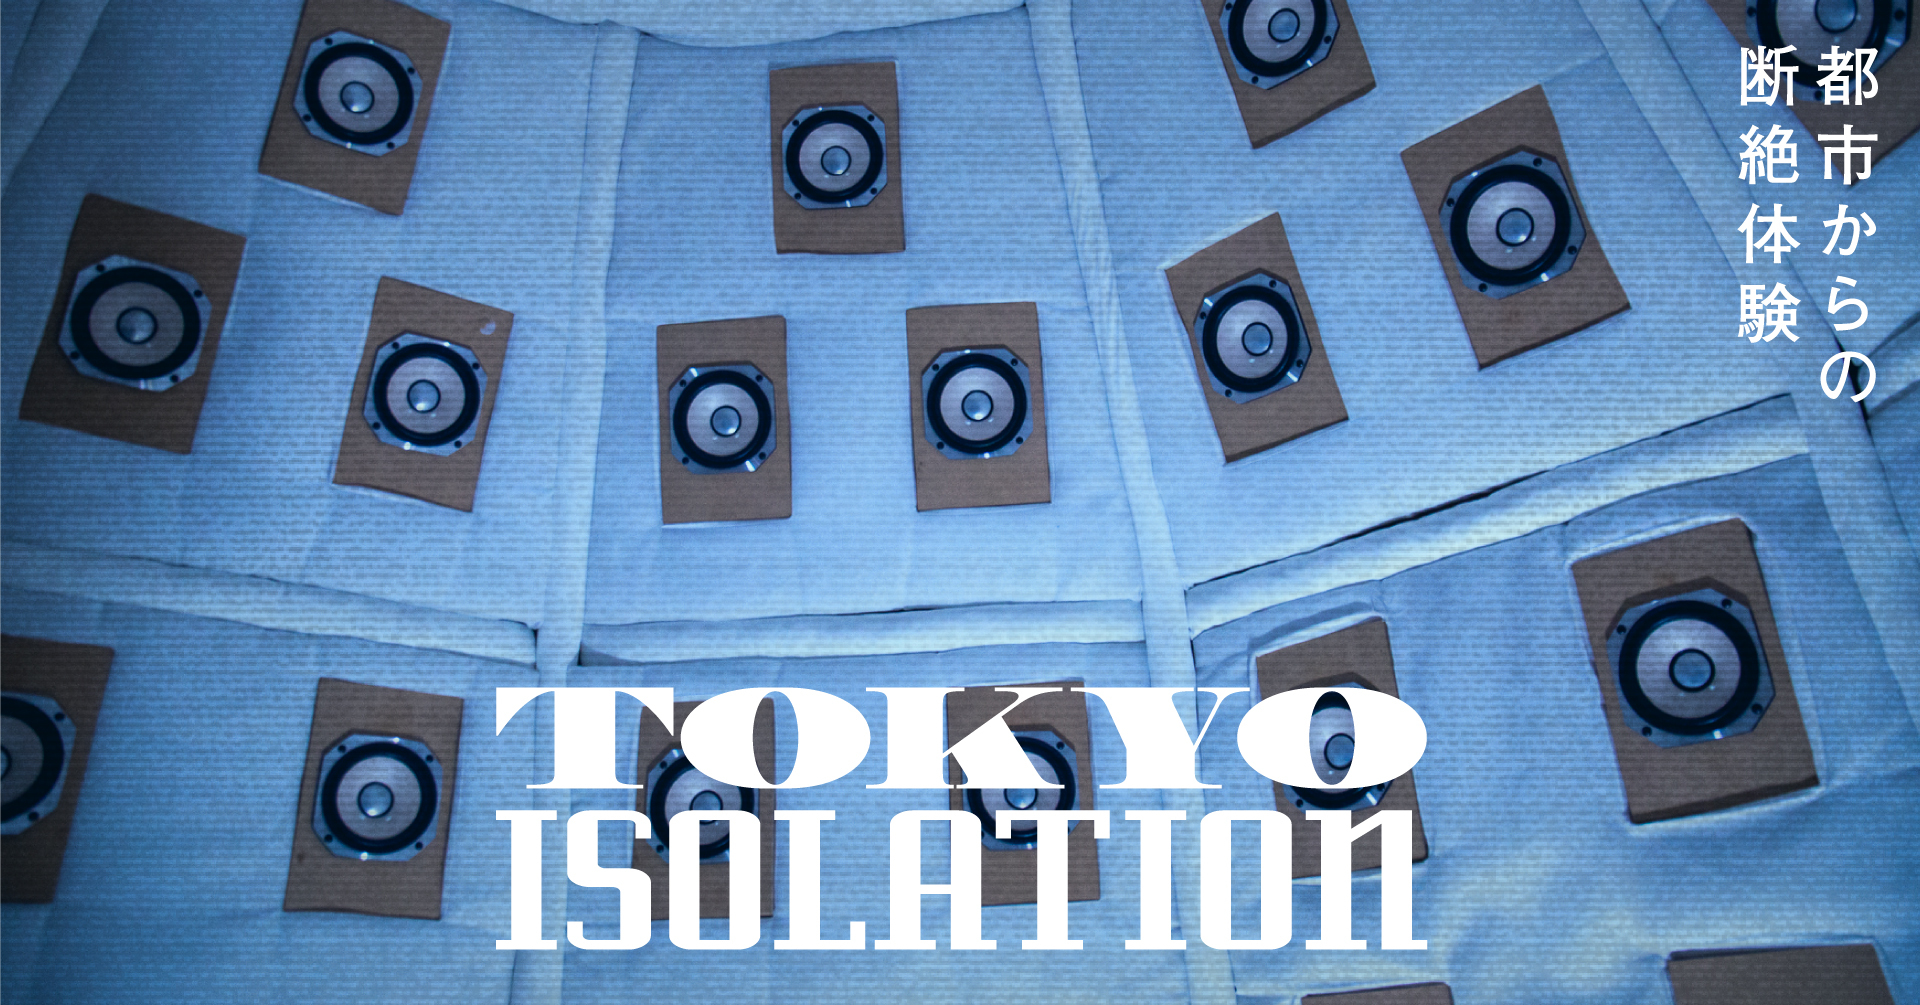 TOKYO ISOLATION